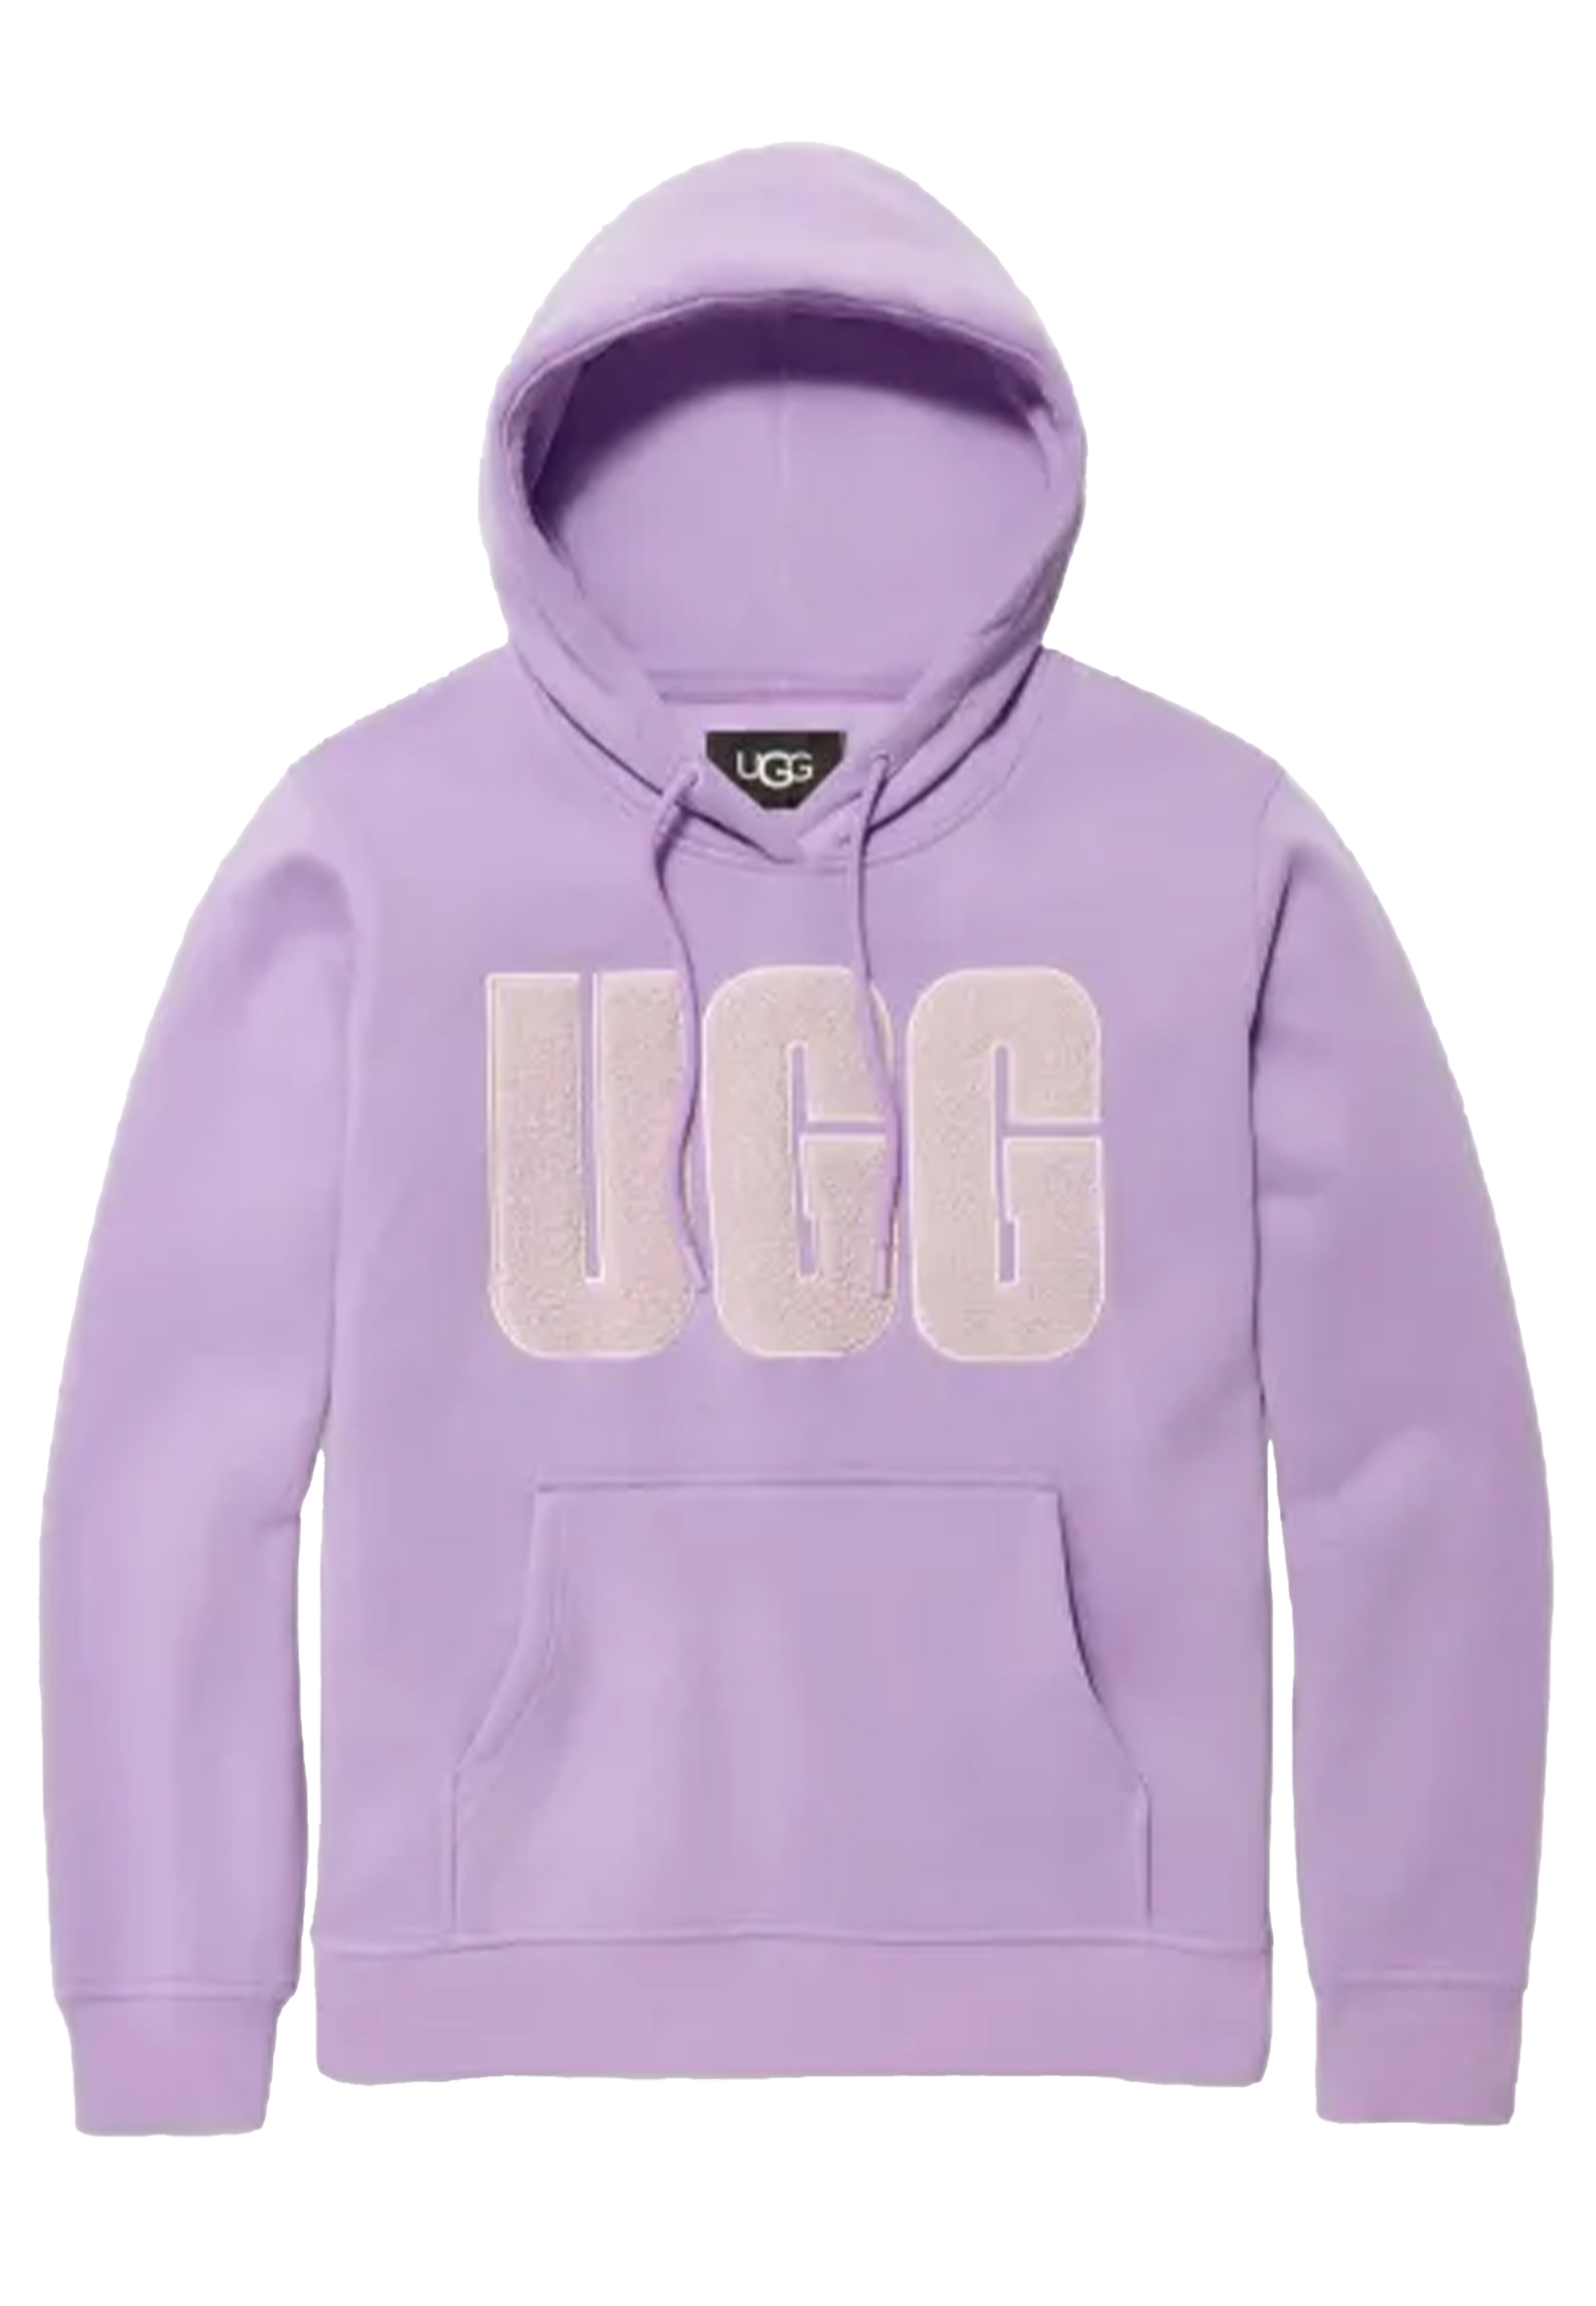 Ugg Trui Paars Katoen maat XS Rey uggfluff logo hoodies paars